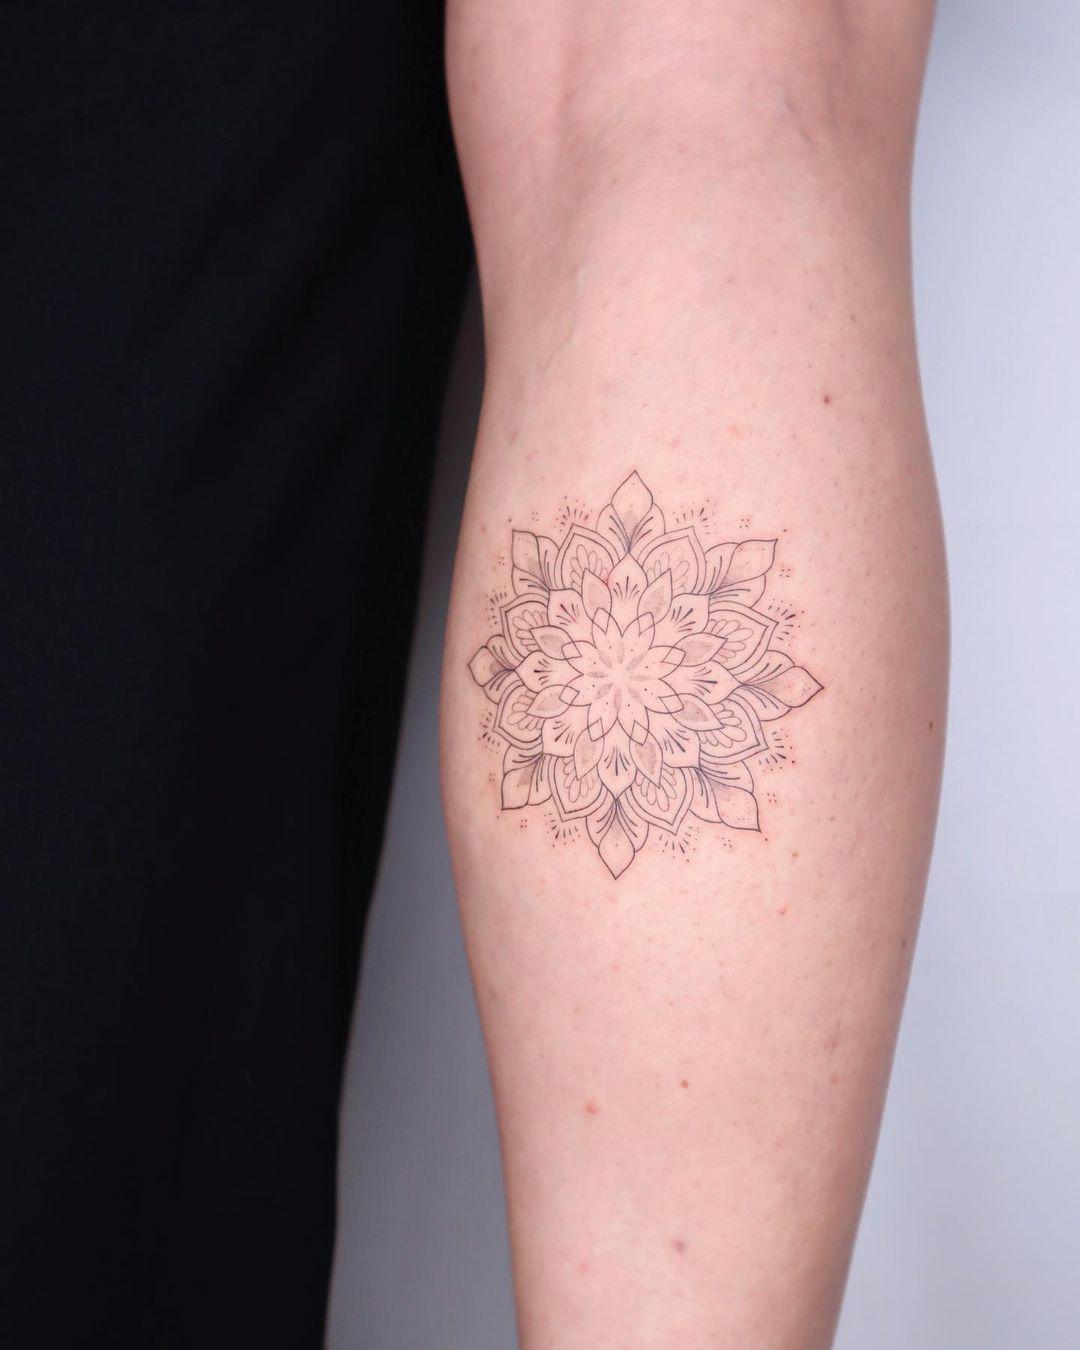 Un minucioso tattoo que representa una flor de loto